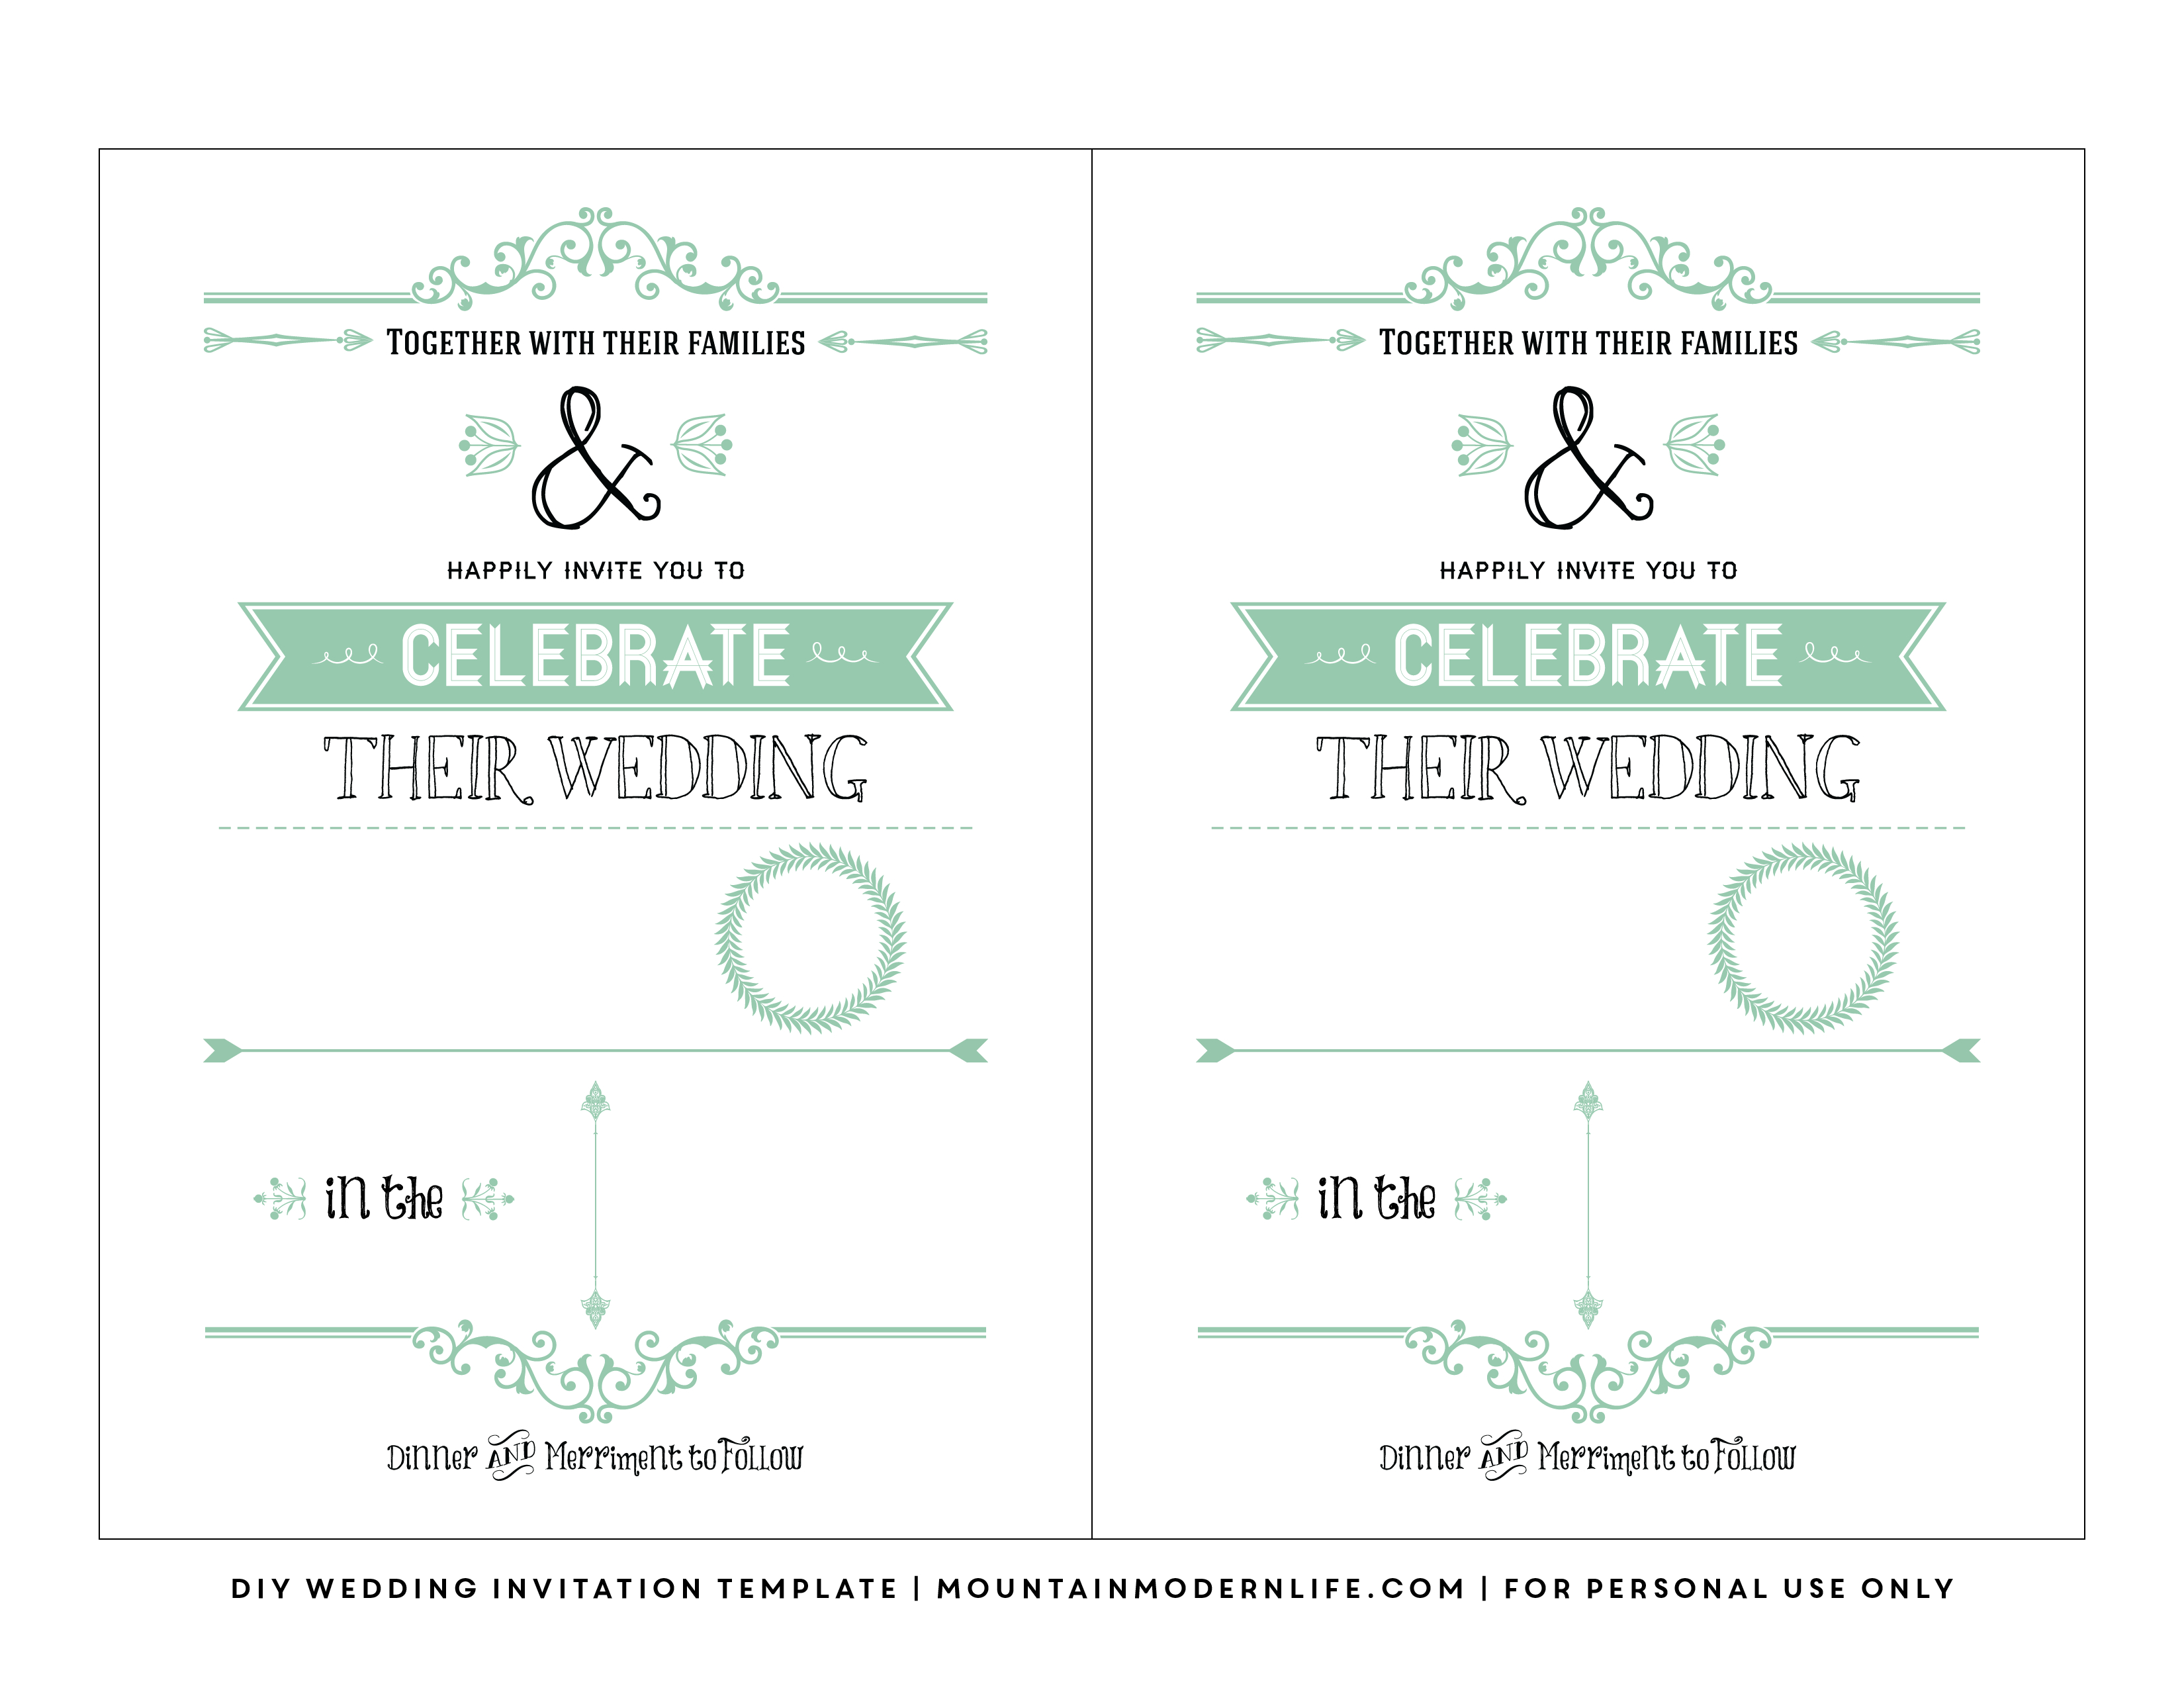 Free Wedding Invitation Template | Mountainmodernlife - Free Printable Wedding Invitations Templates Downloads